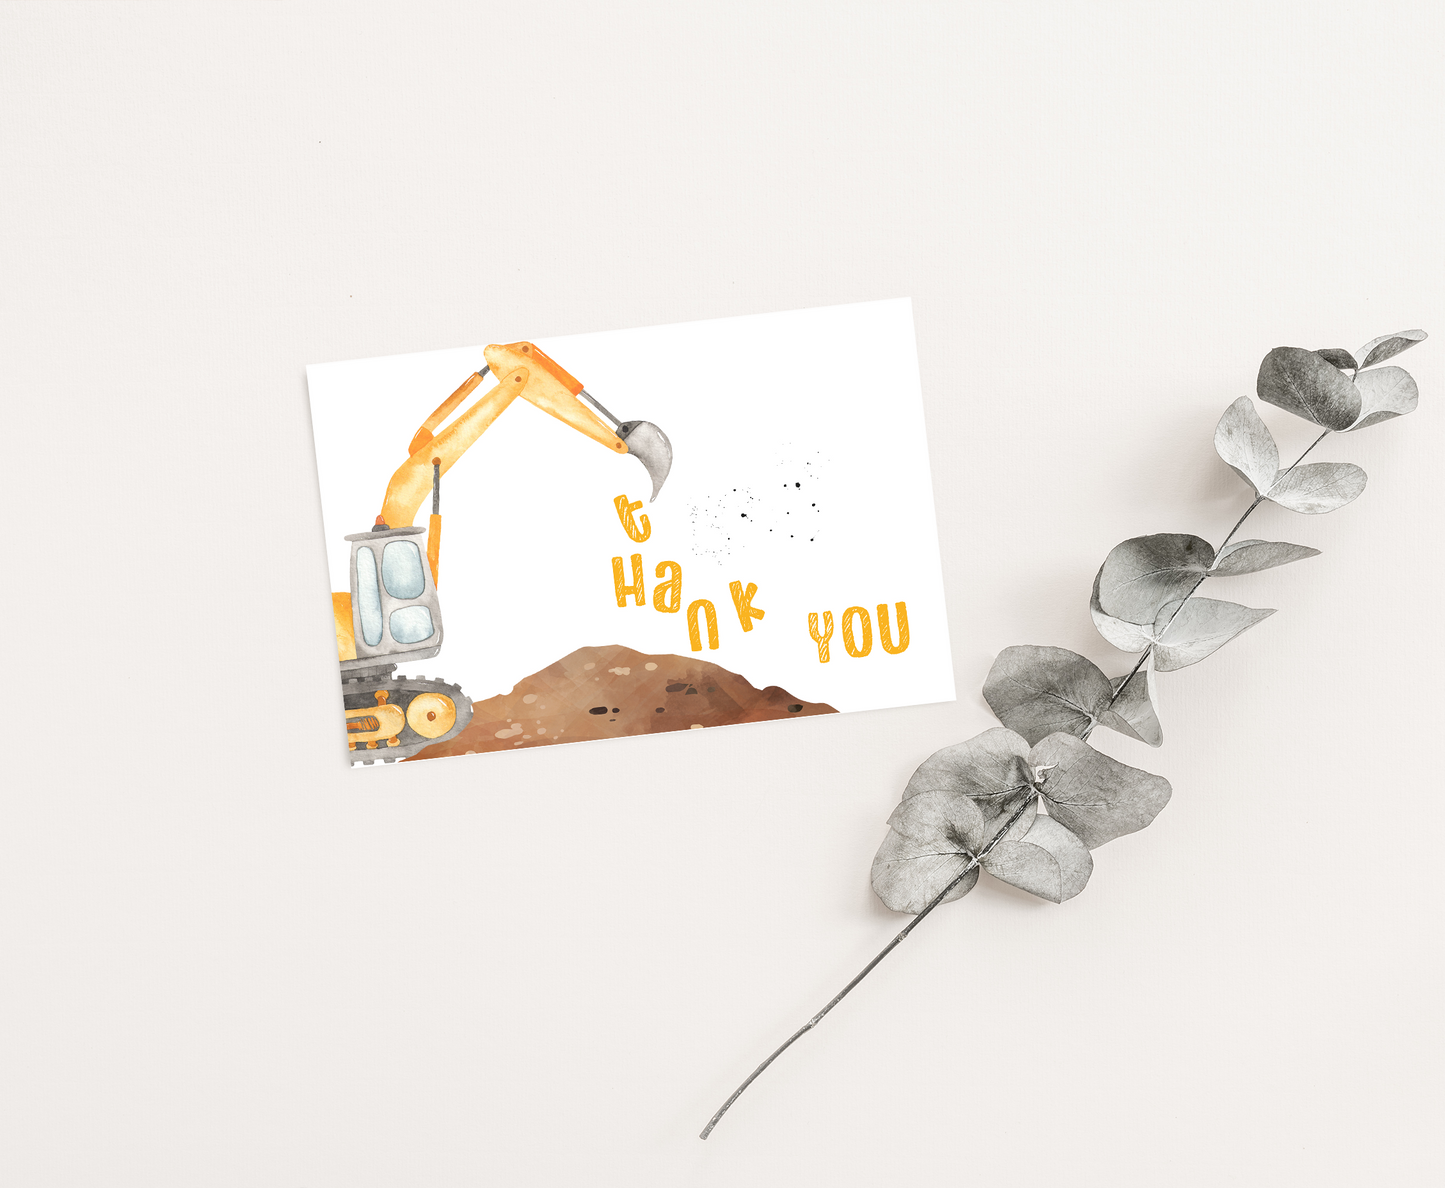 Construction Thank You Card | Under Construction Party Printables - 07A